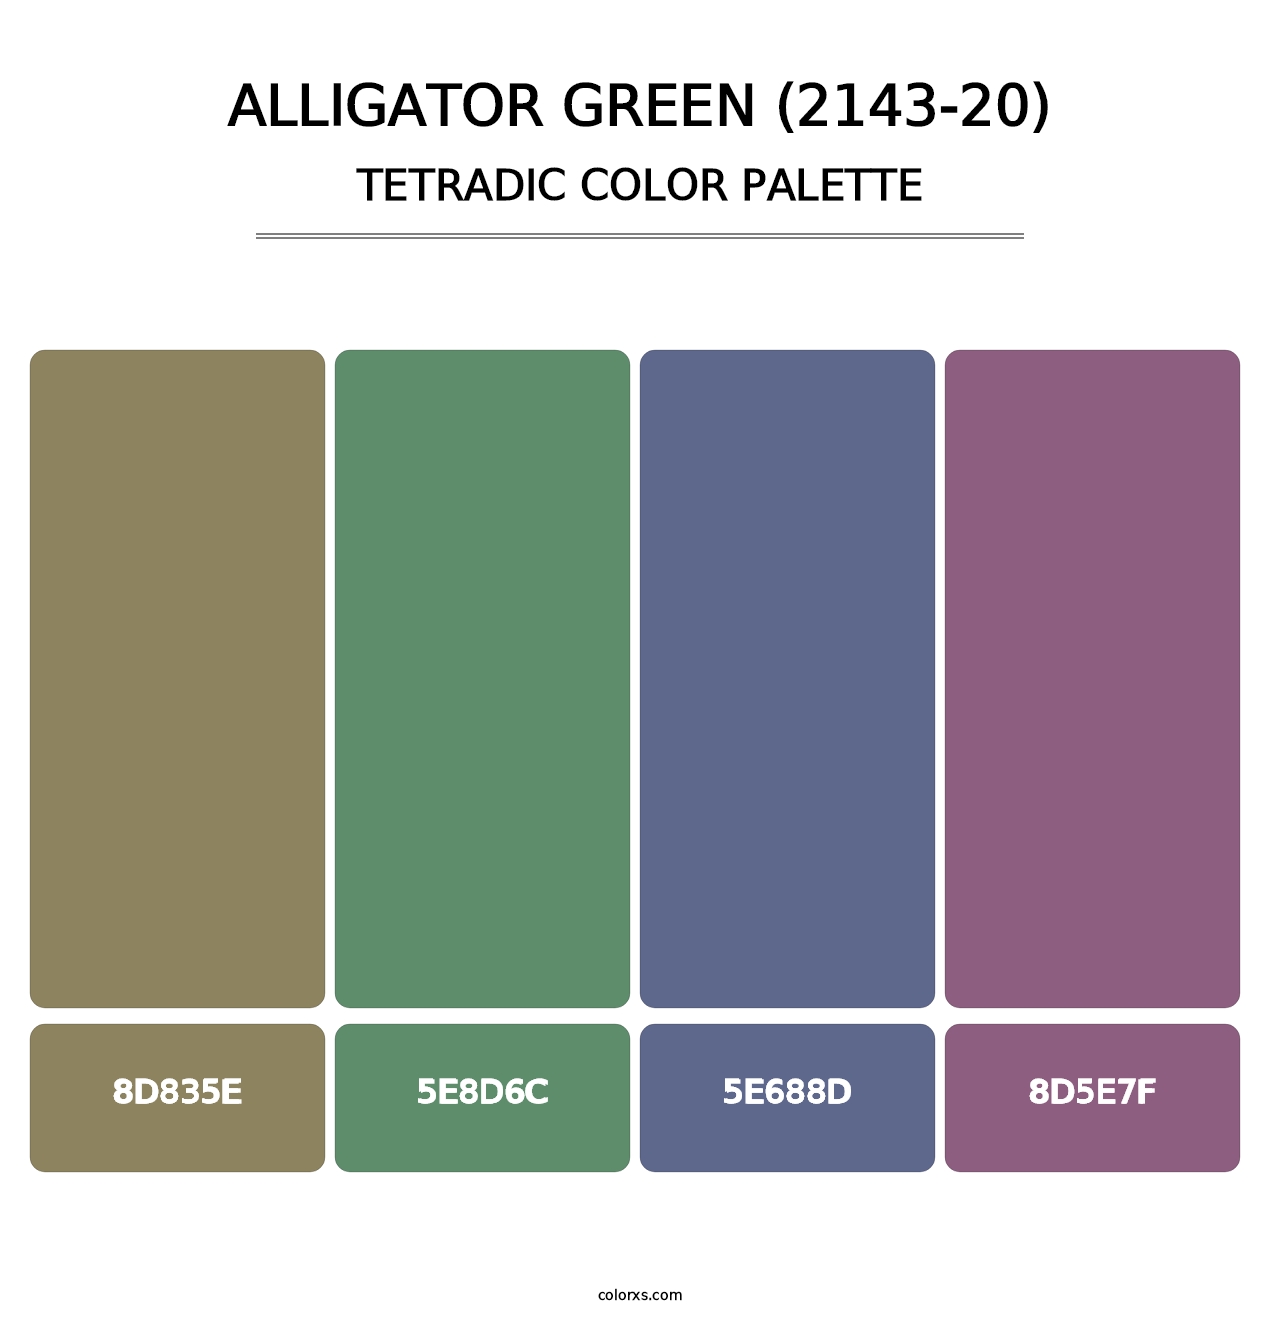 Alligator Green (2143-20) - Tetradic Color Palette